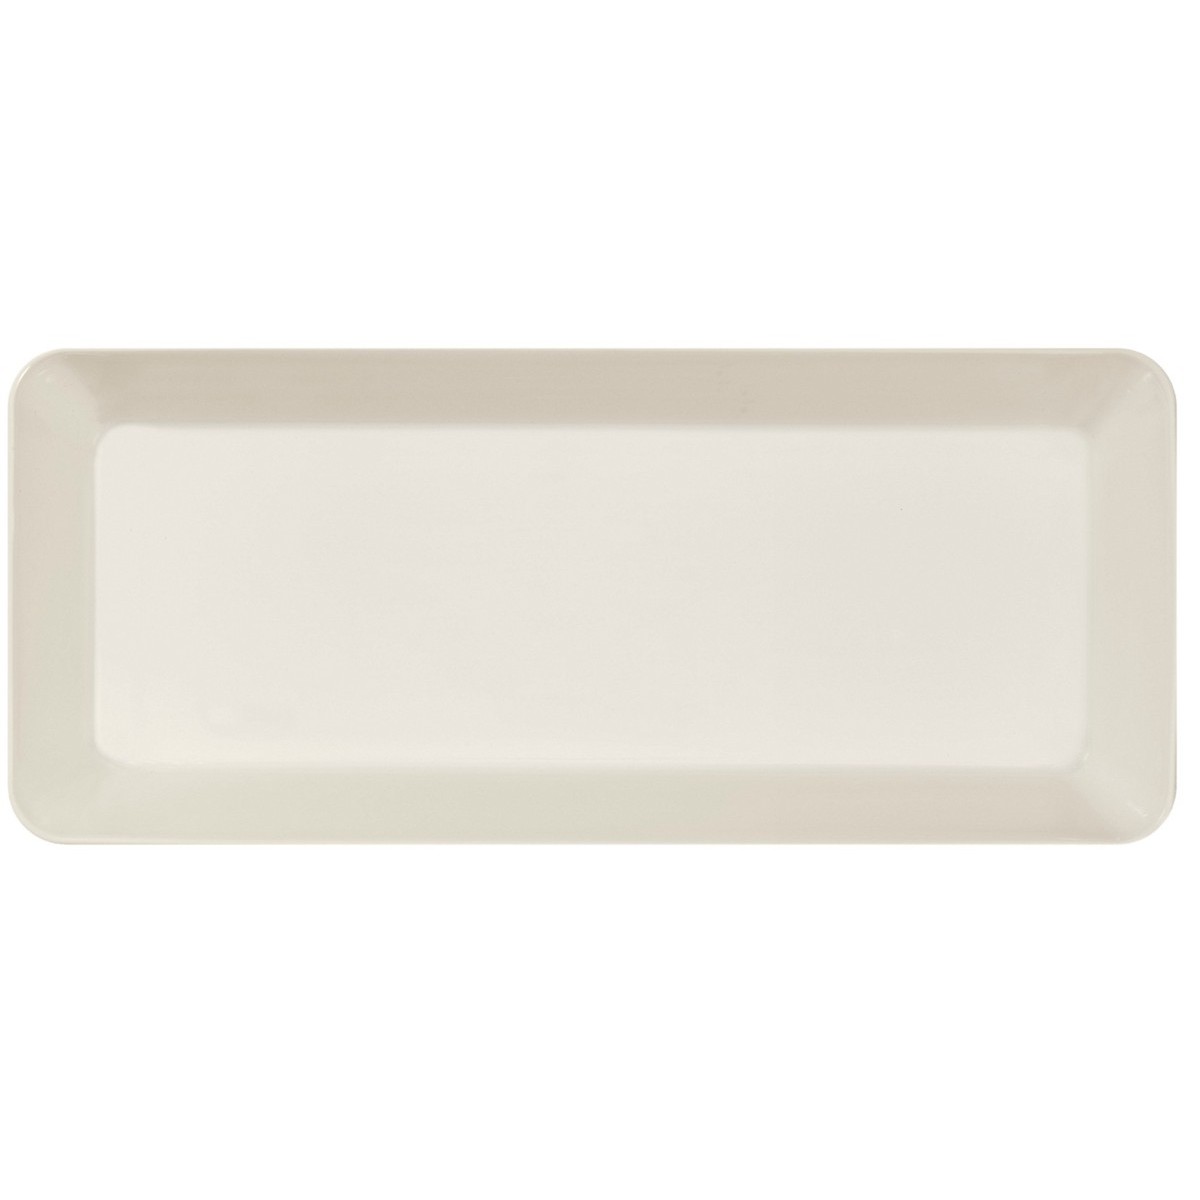 16x37cm - Teema platter - white - 1005927